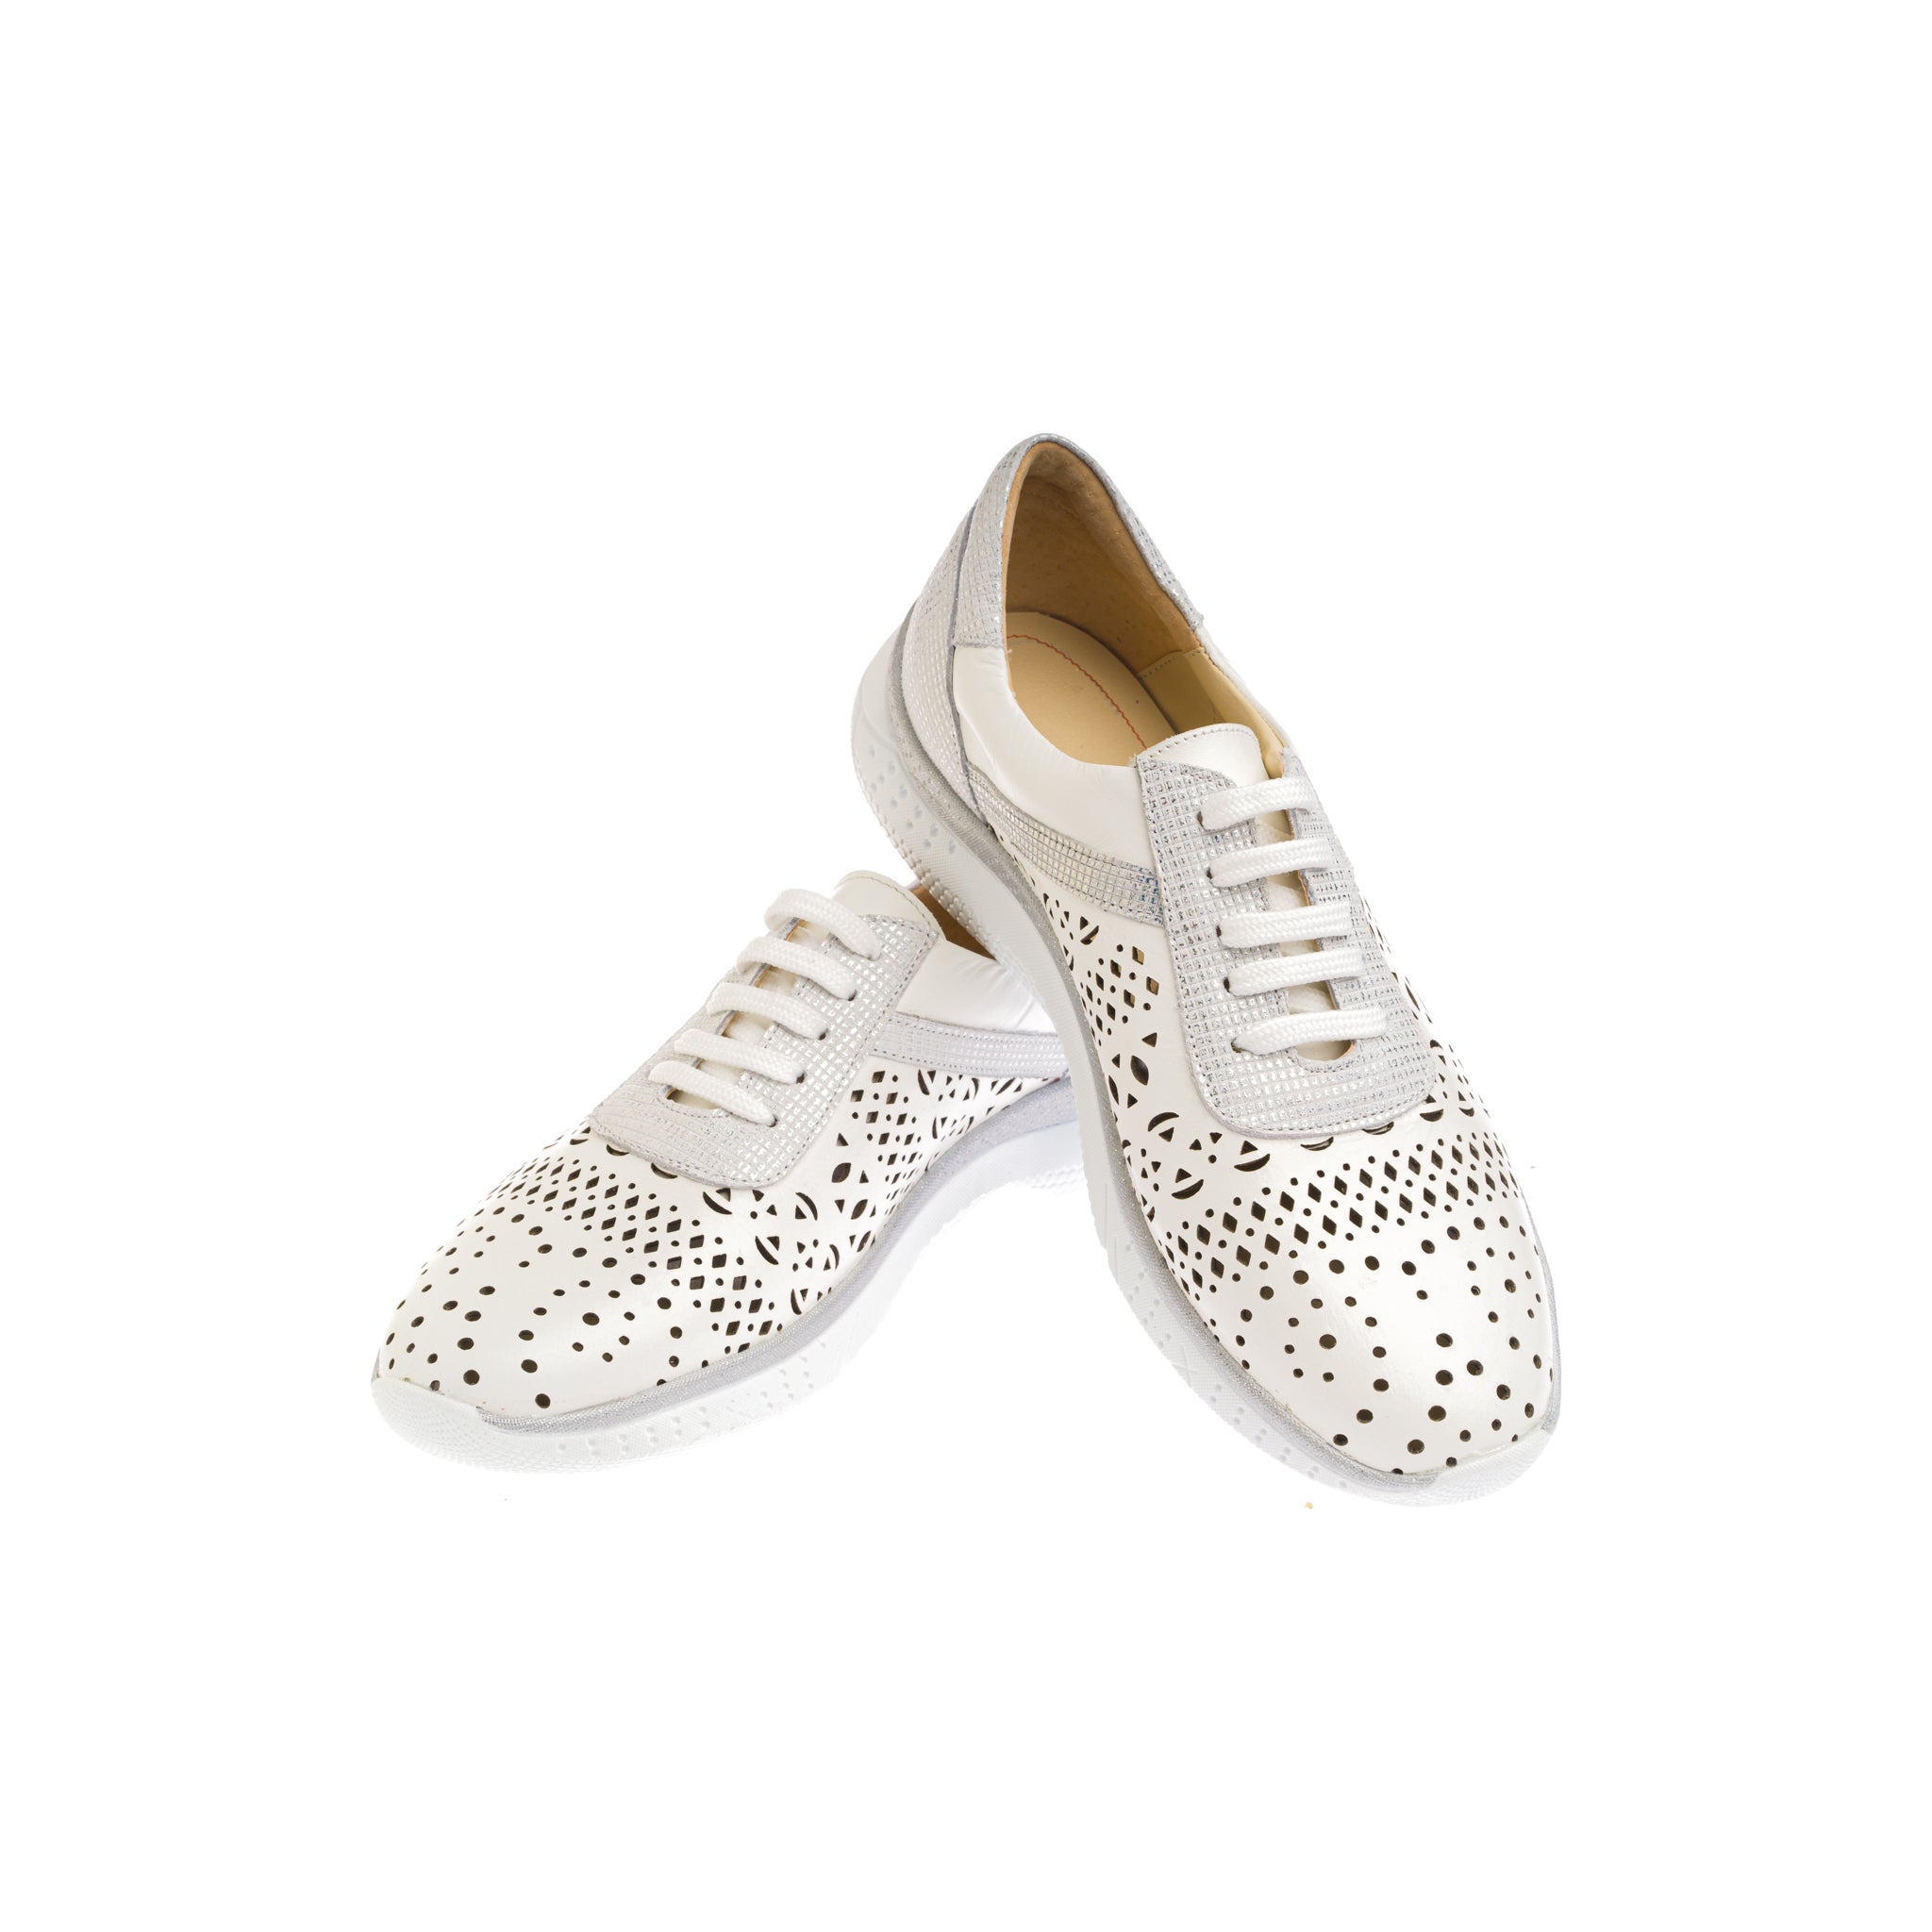 Pantofi Casual Dama din Piele Naturala,Joanna,albi